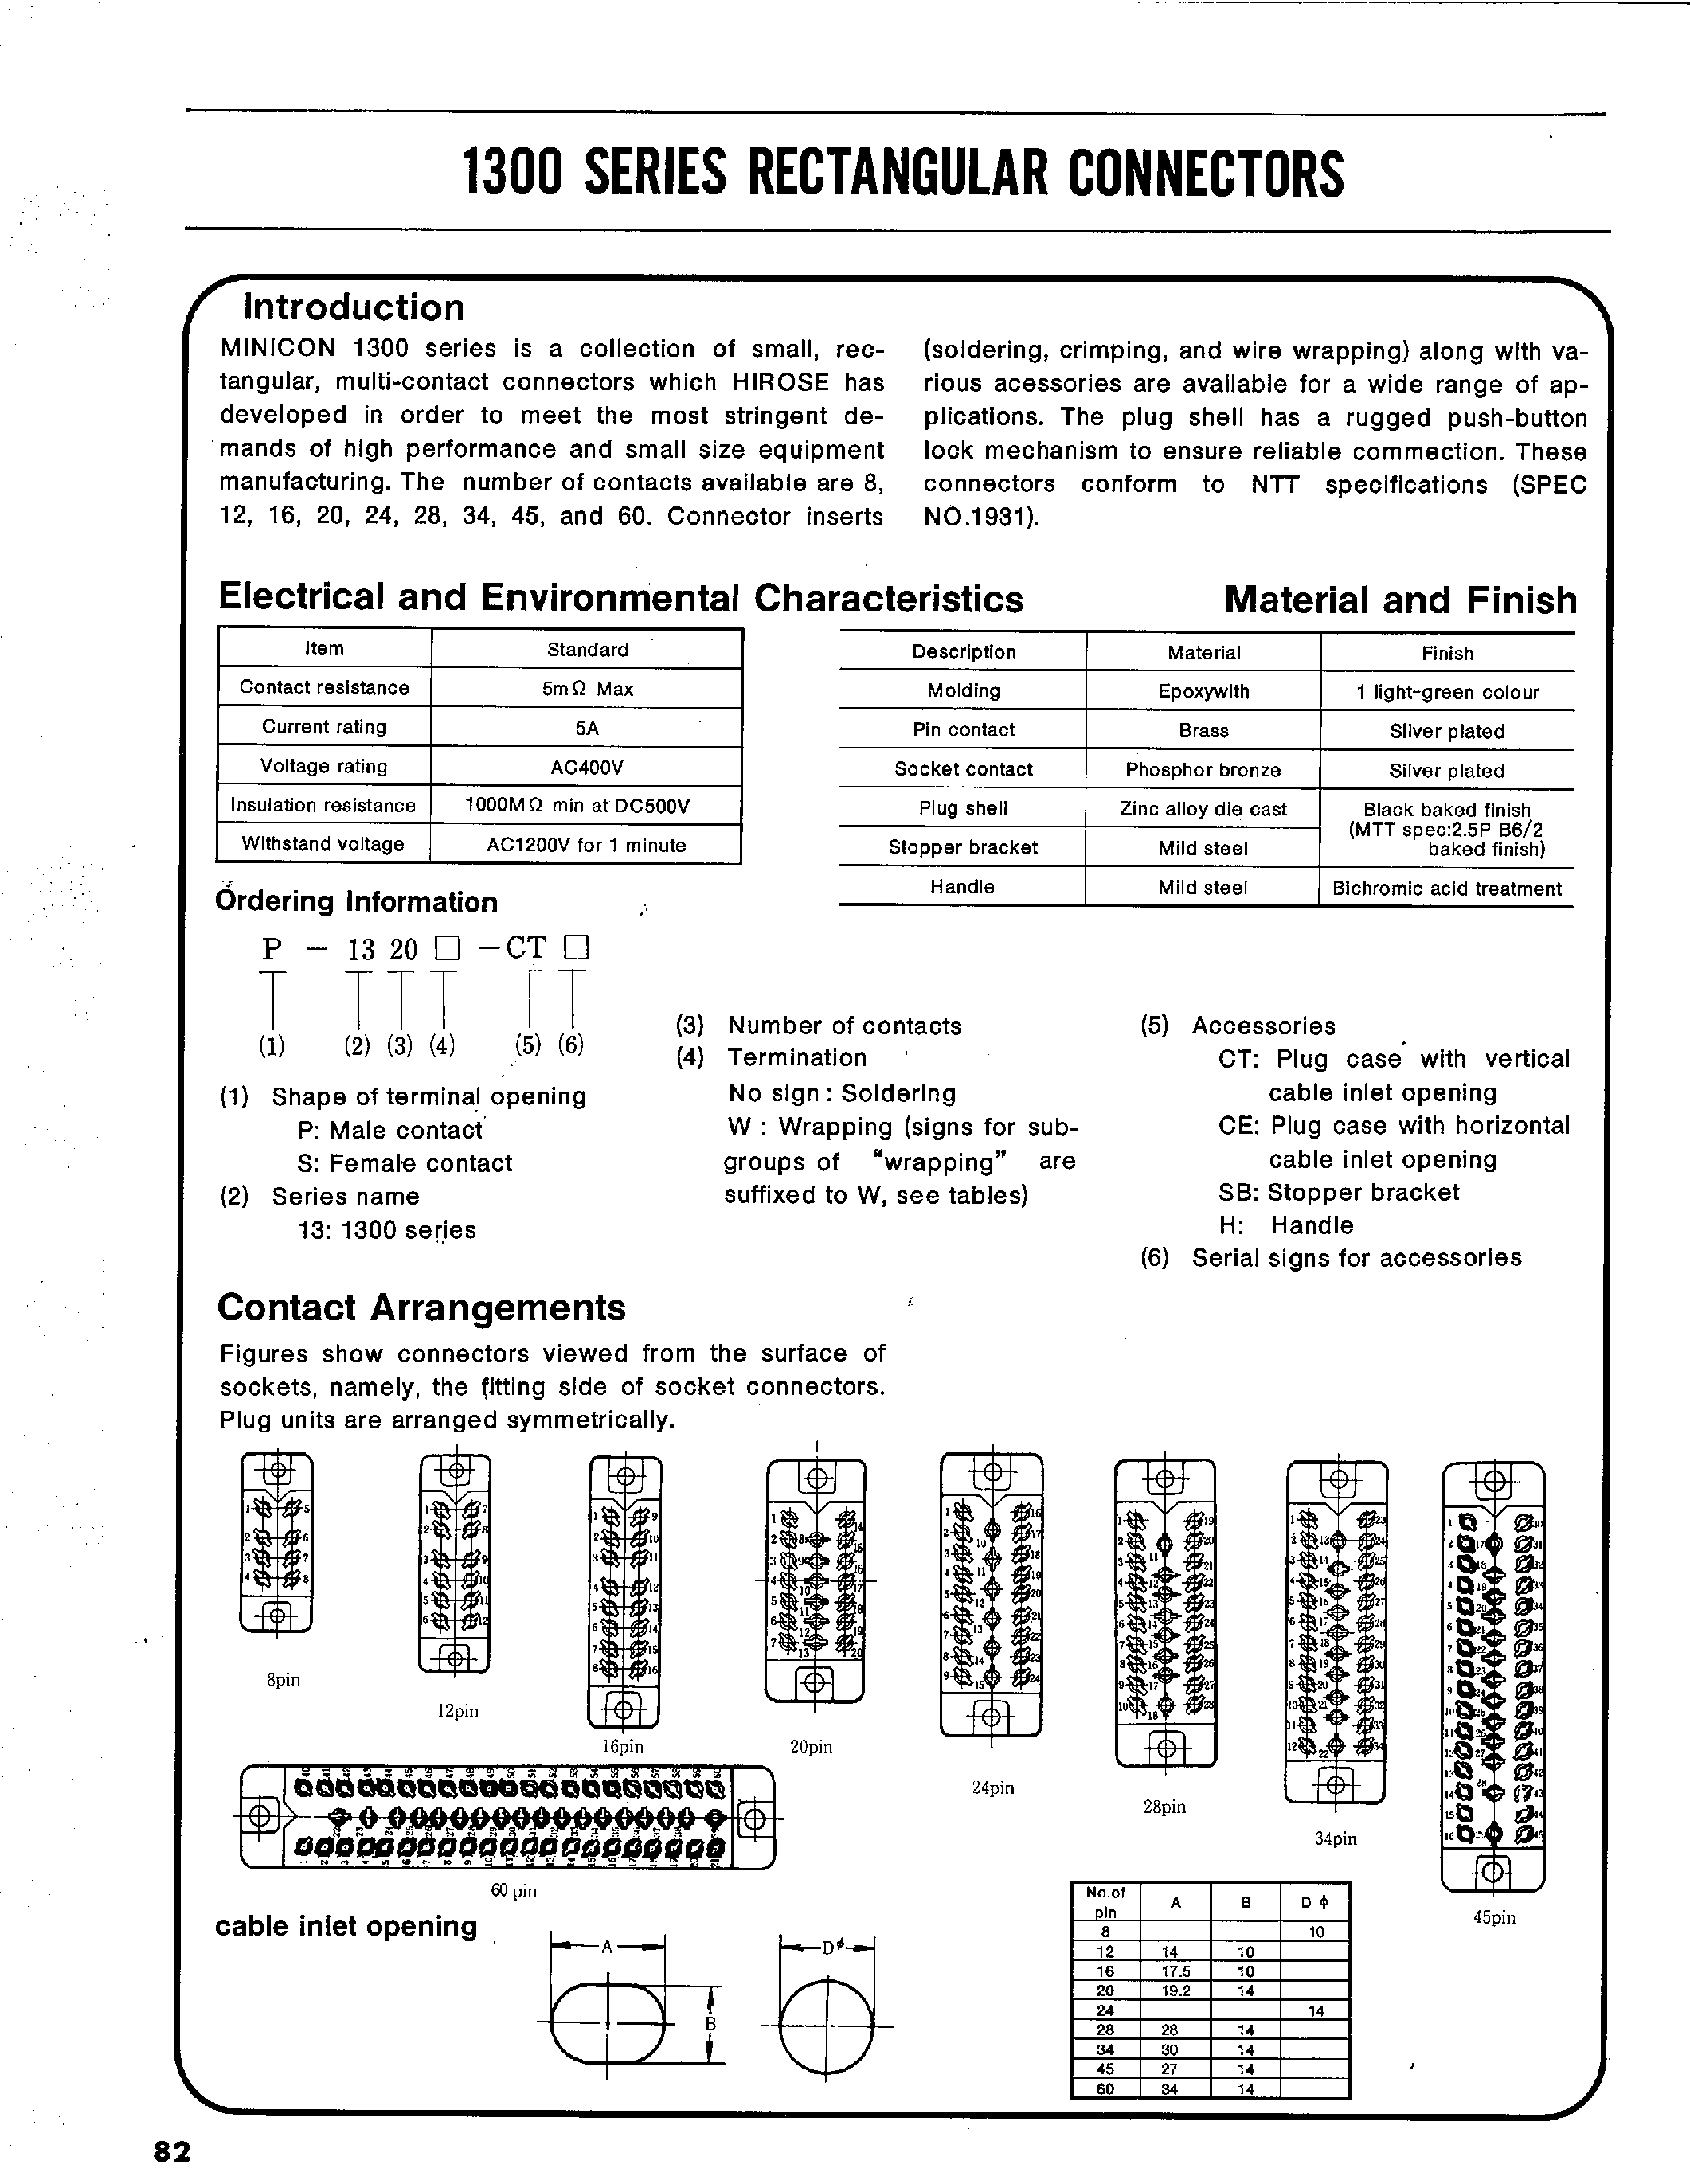 Datasheet P-1320-CT - 1300 SERIES RECTANGULAR CONNECTORS page 1